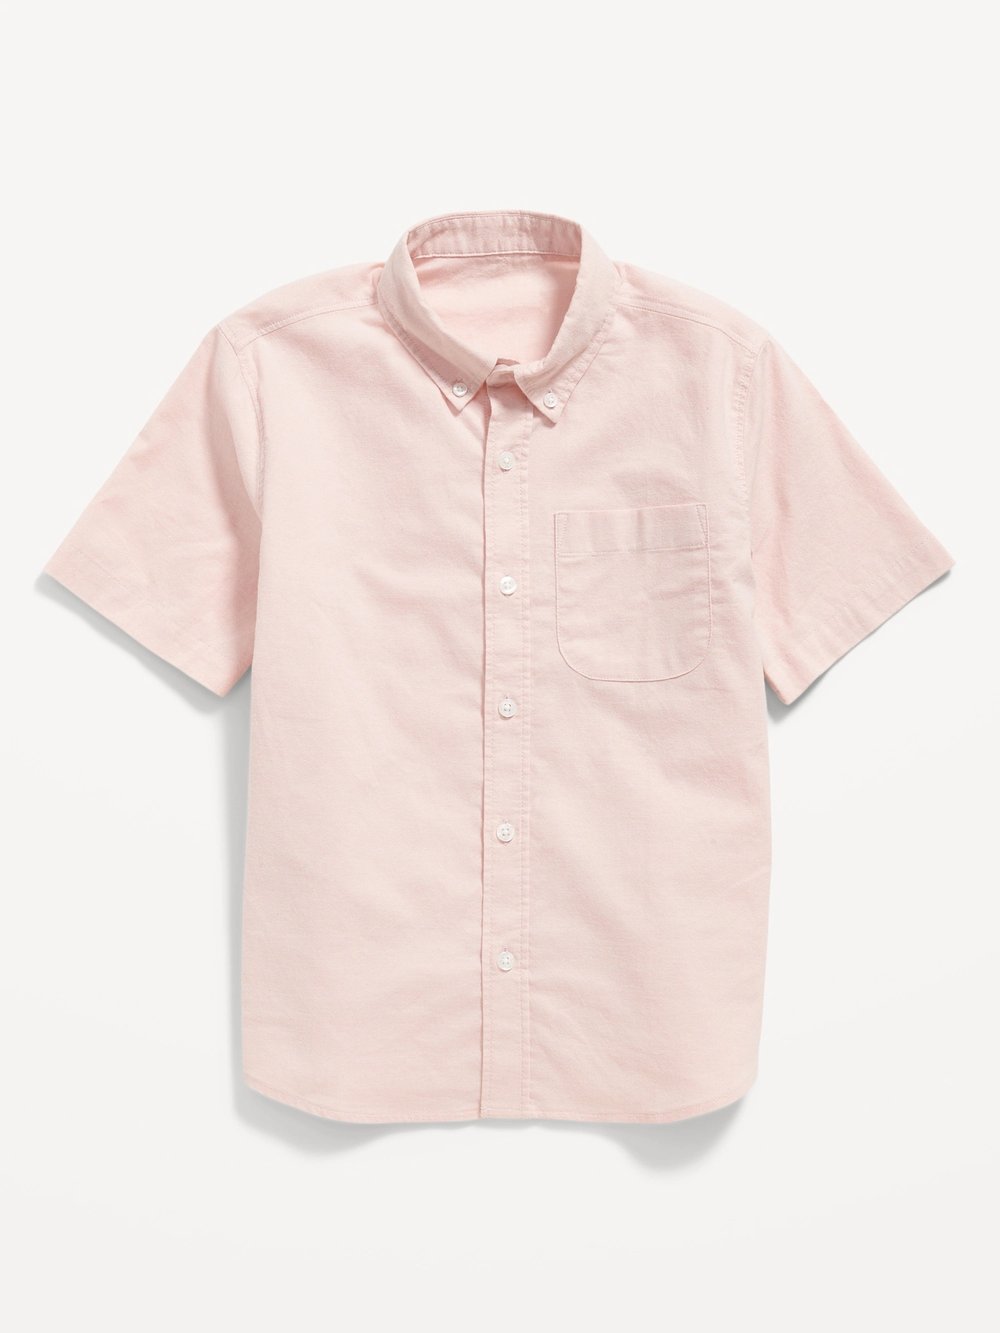 Boys Pink Shirt.jpeg